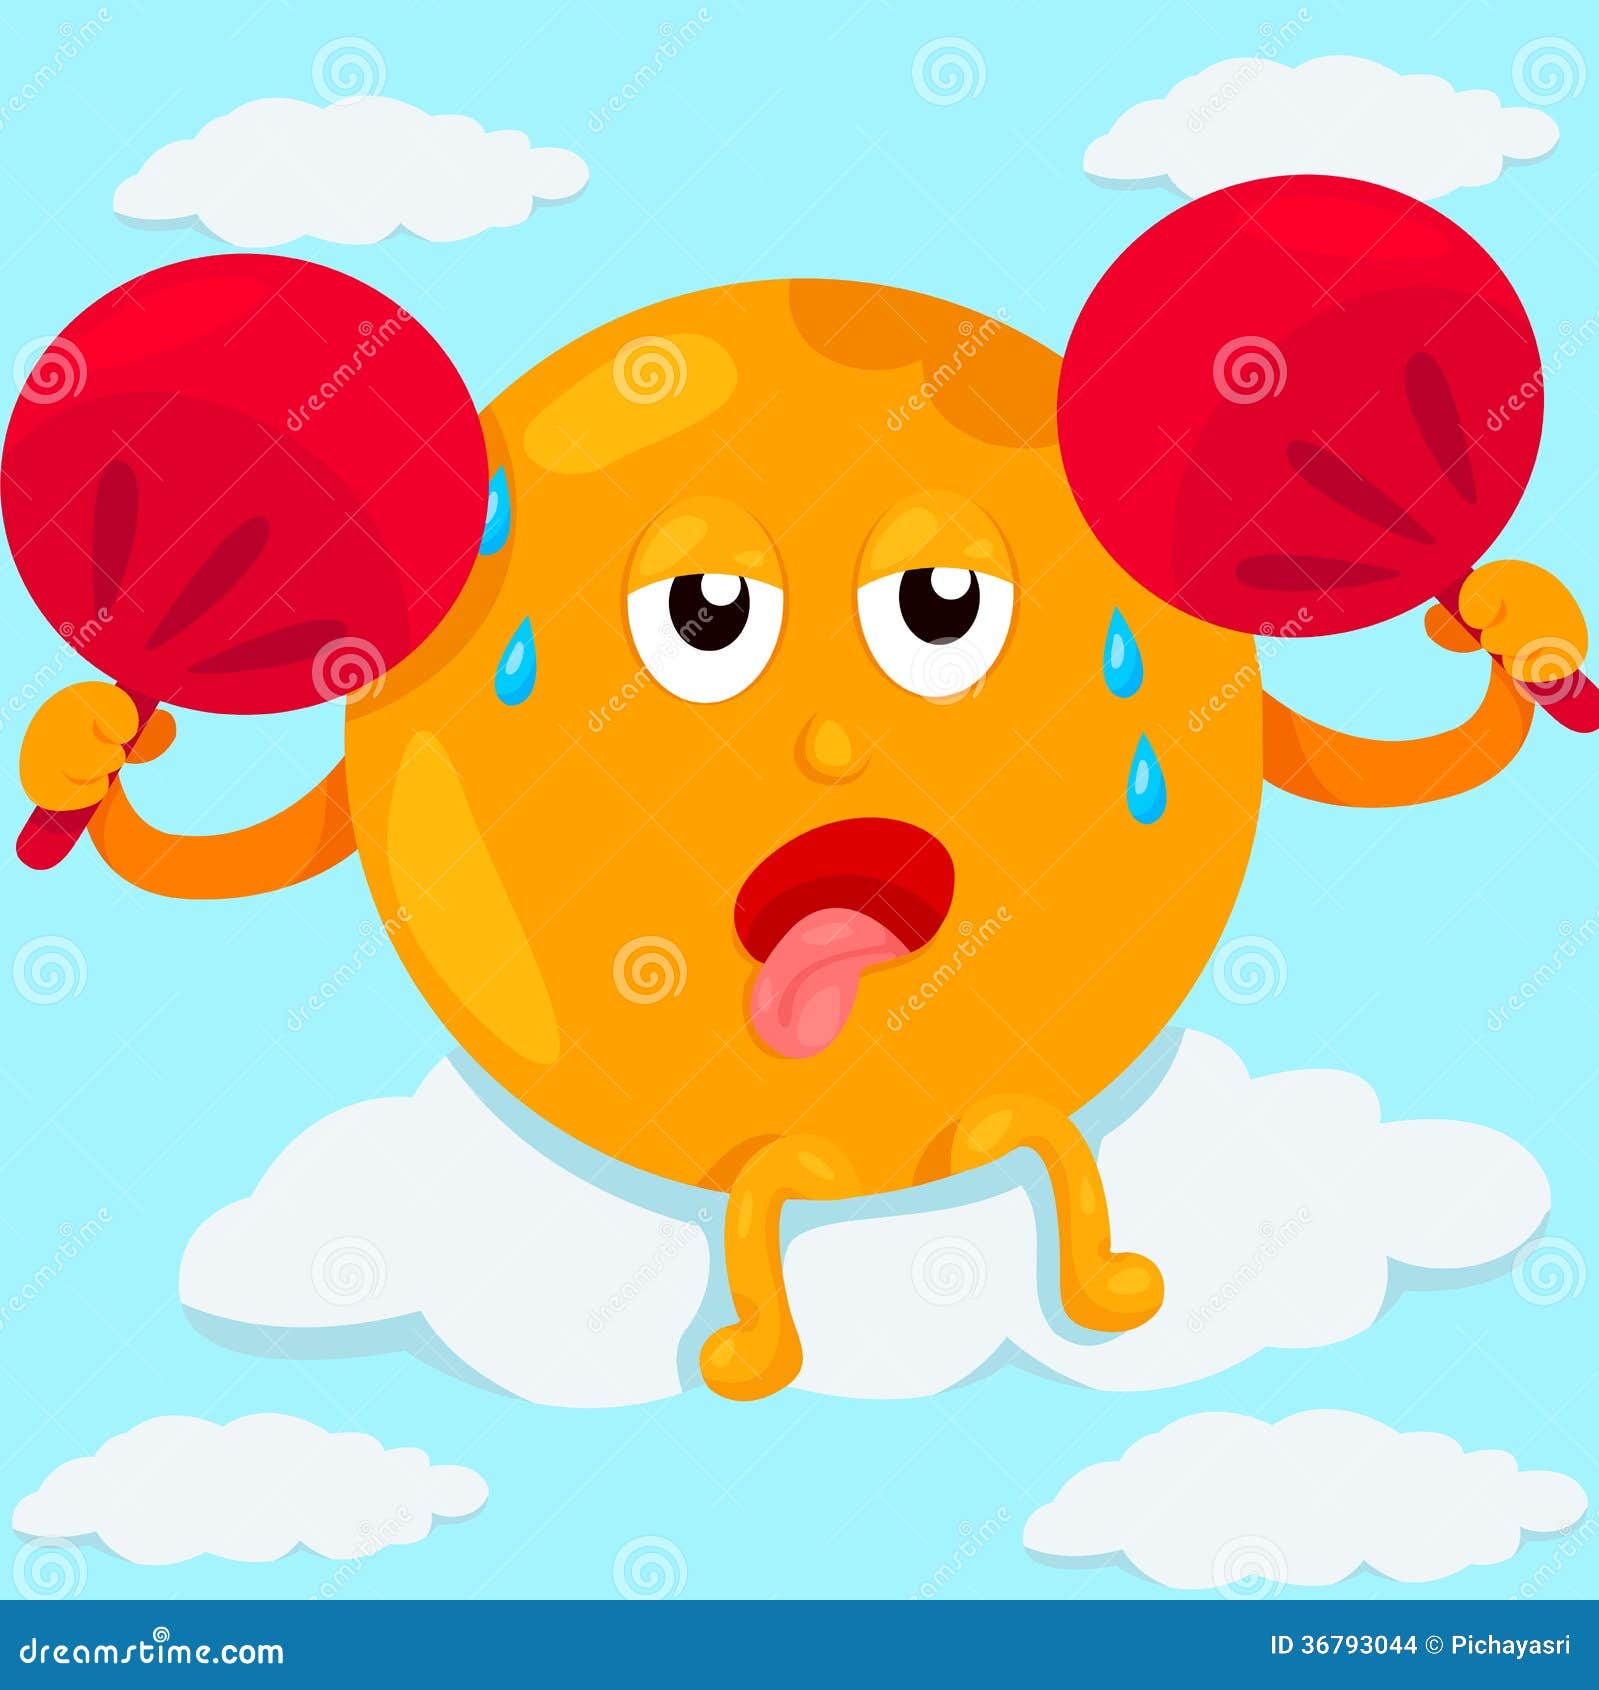 Illustration of cartoon sun sweating